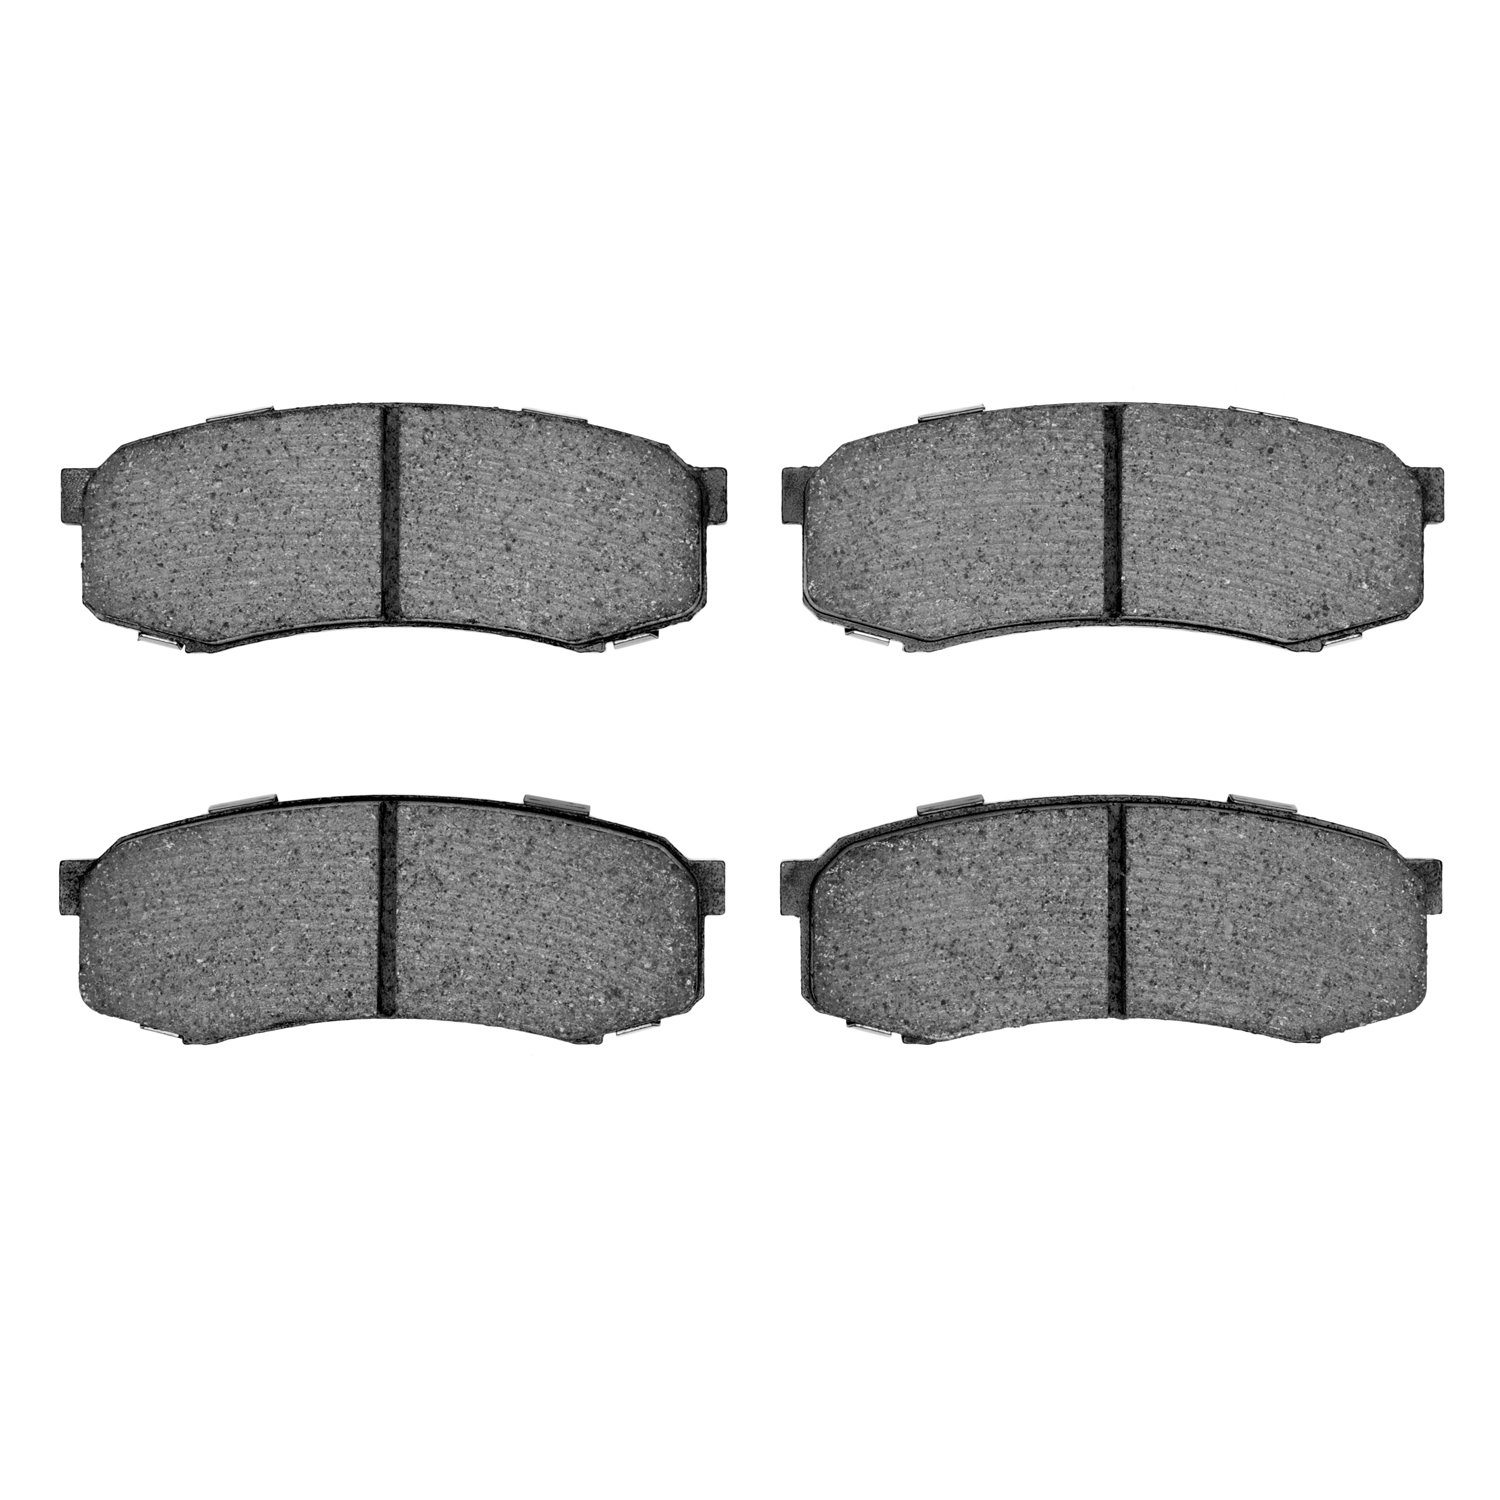 1311-0606-00 3000-Series Semi-Metallic Brake Pads, Fits Select Multiple Makes/Models, Position: Rear